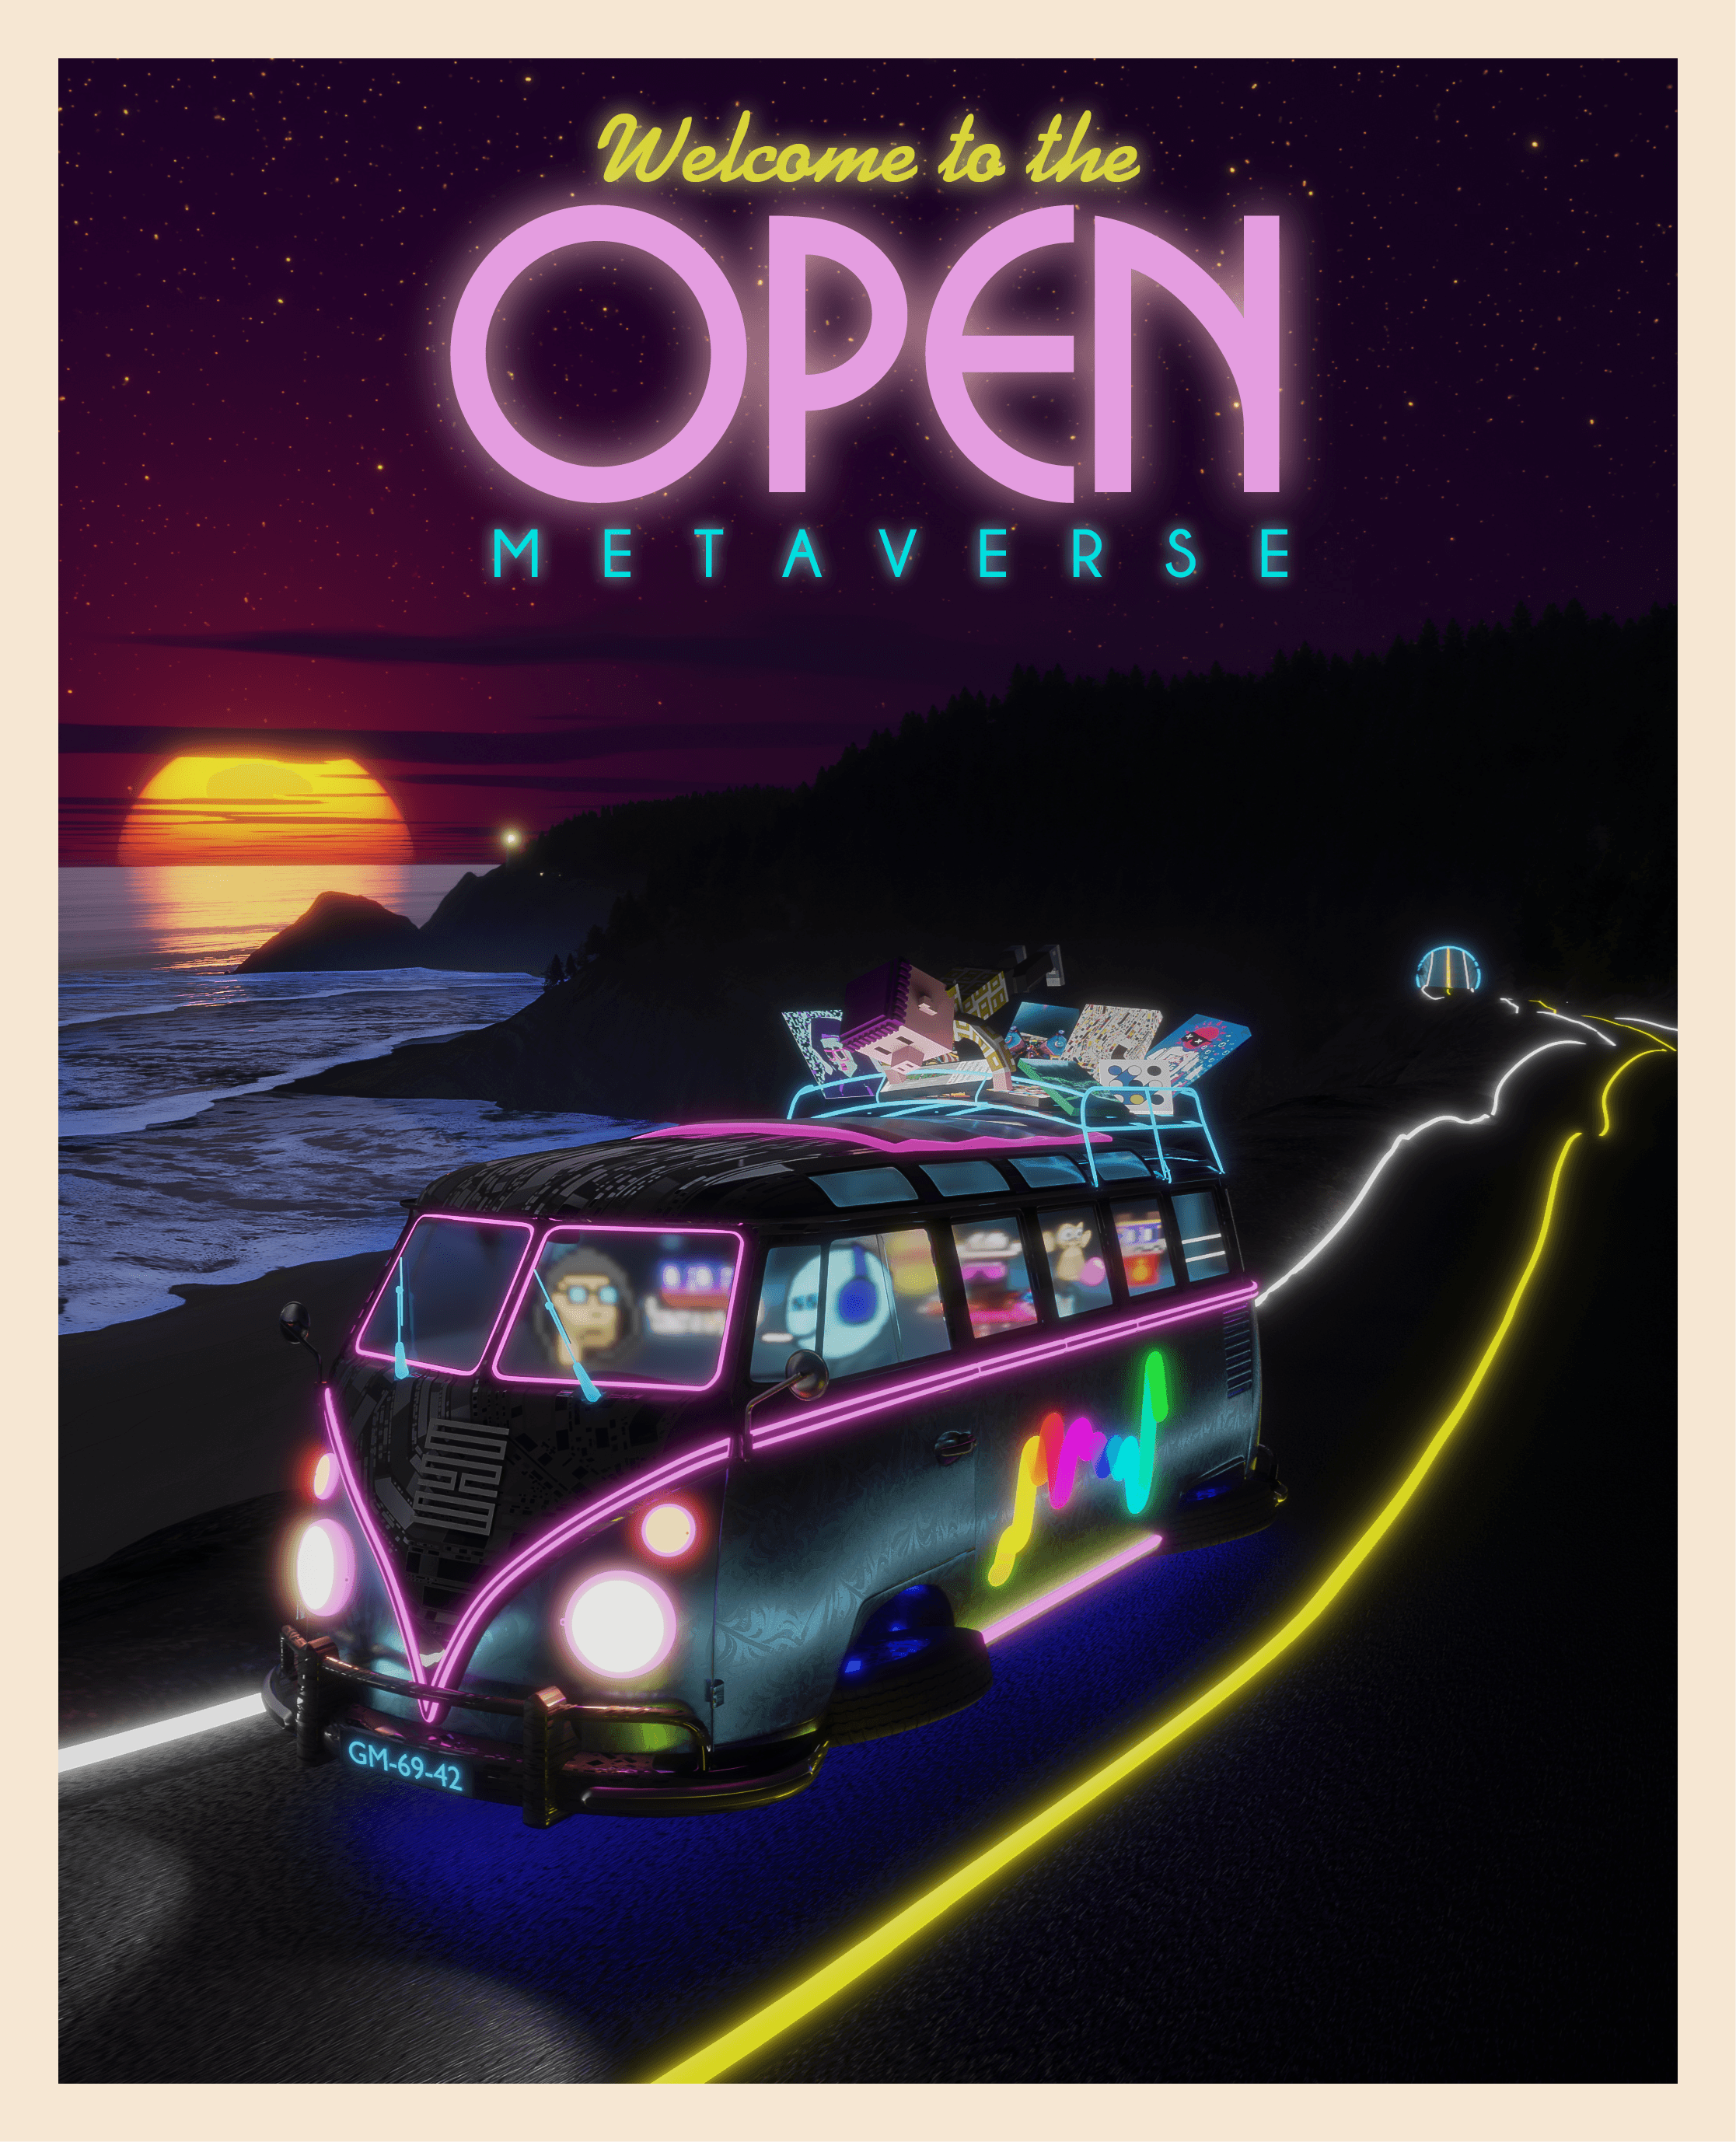 Open Roads, Open Metaverse